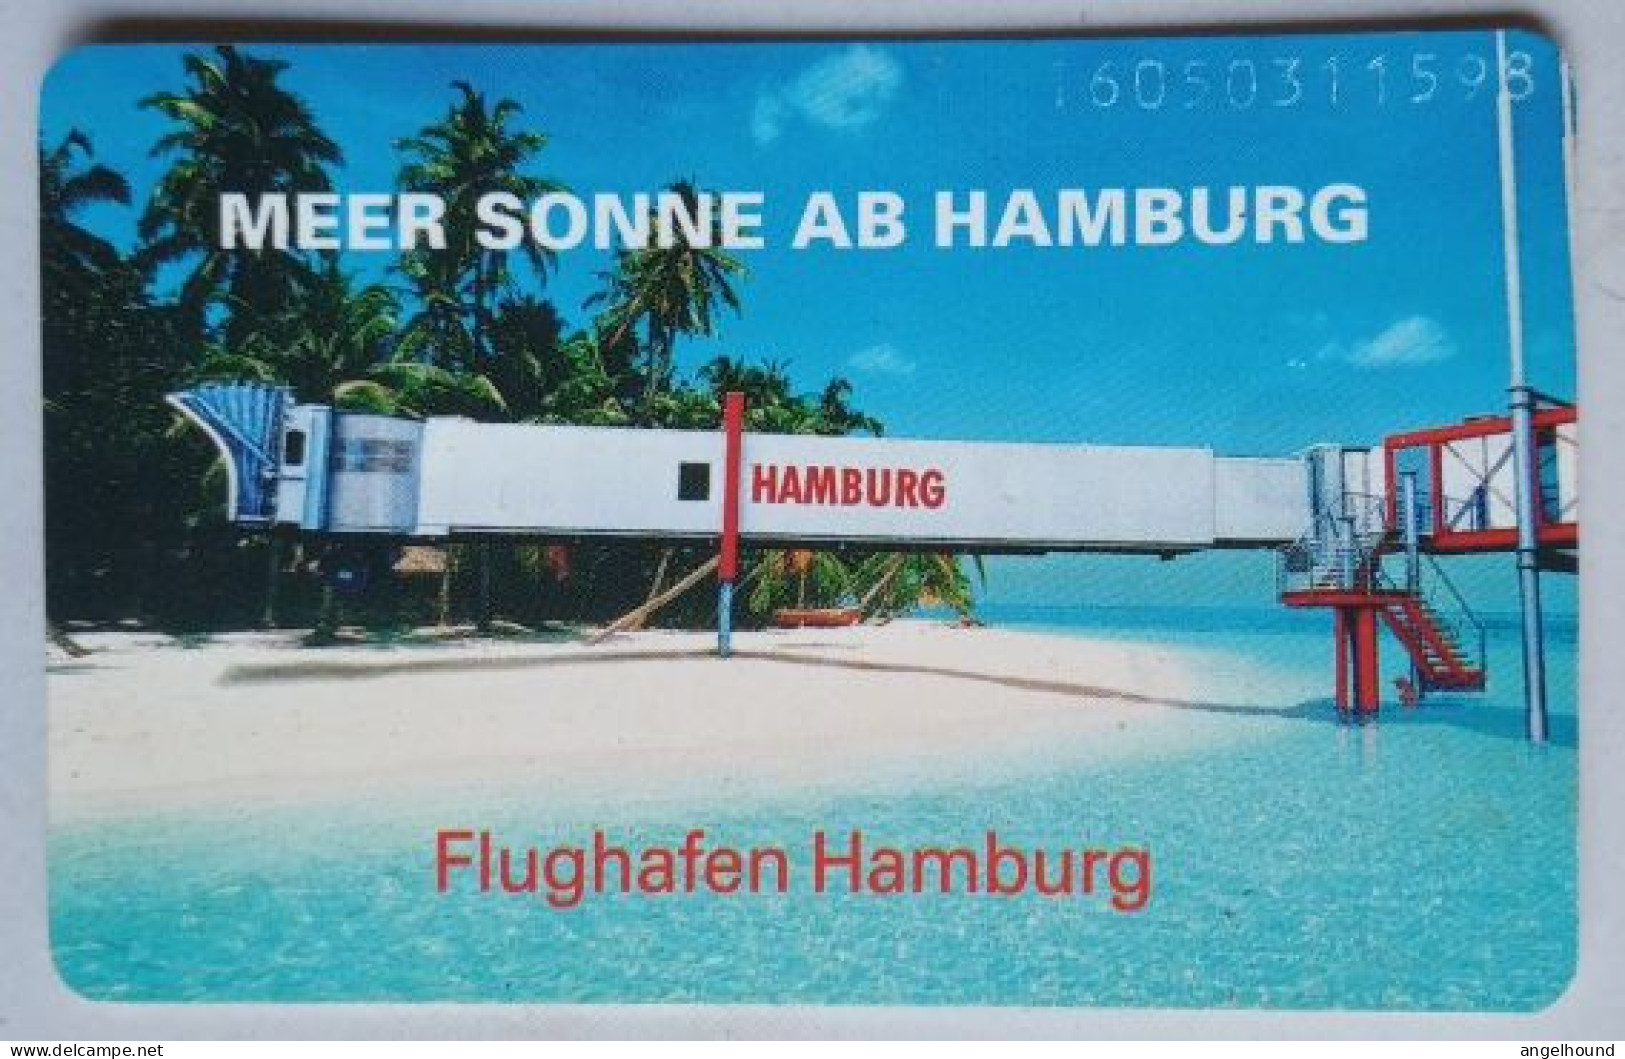 Germany 6 DM  MINT K 011 07.96 2500 Mintage - Flughafen Hamburg / Meer Sonneab Hamburg - K-Series : Série Clients